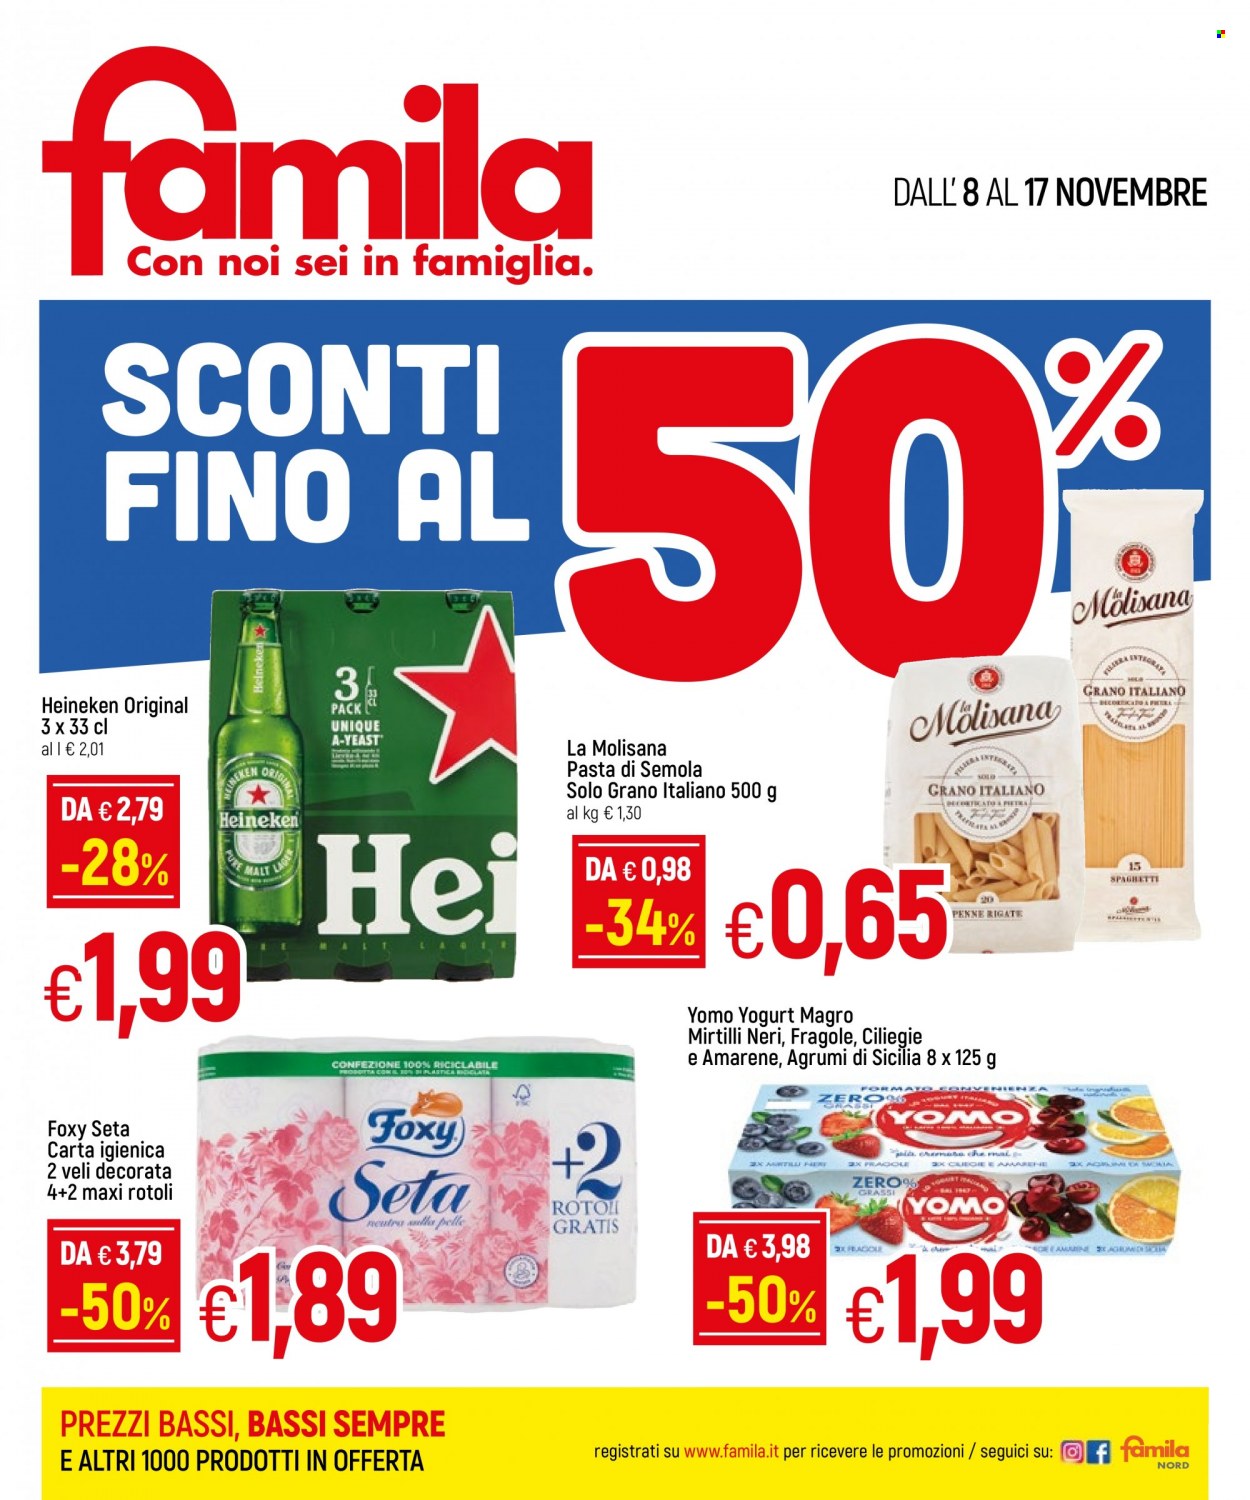 thumbnail - Volantino Famila - 8/11/2021 - 17/11/2021 - Prodotti in offerta - Heineken, birra, yogurt, Yomo, spaghetti, pasta, penne, carta igienica, Foxy. Pagina 1.